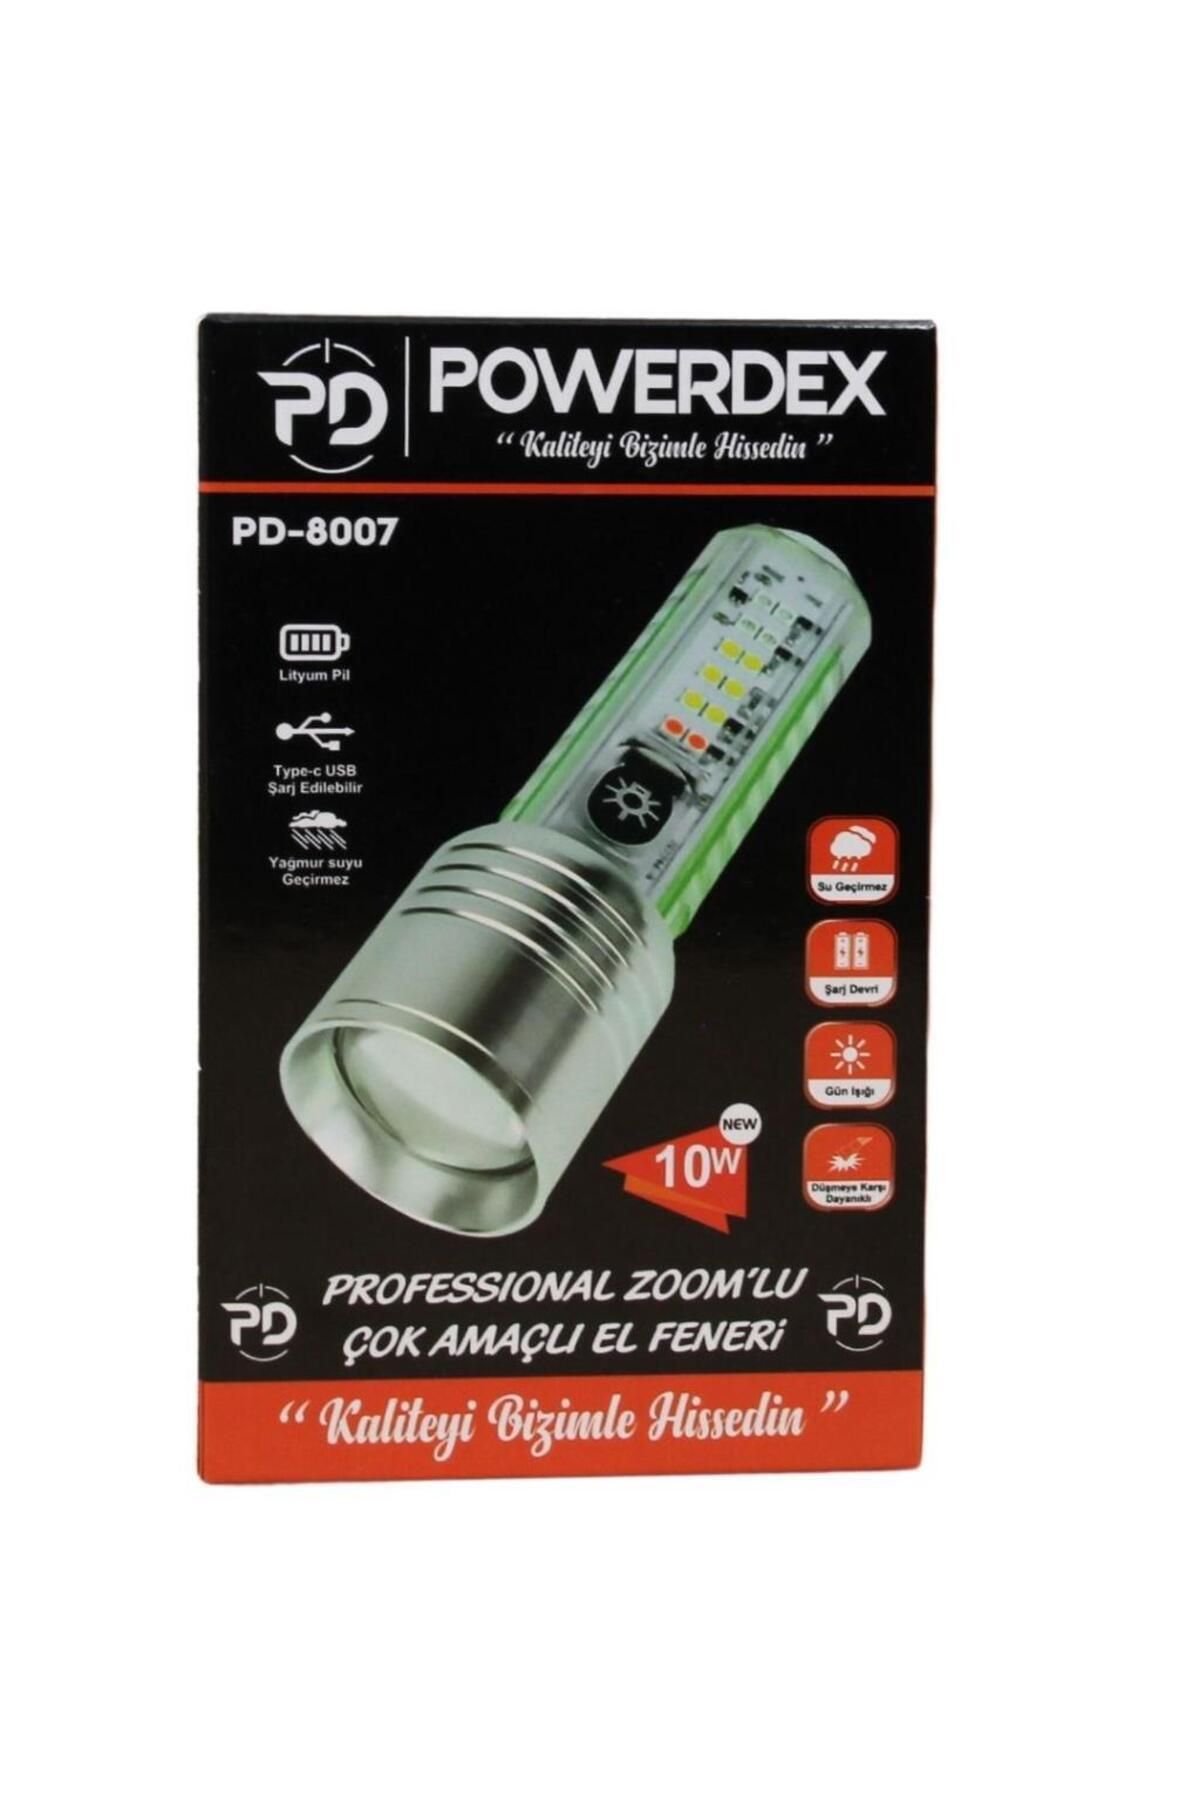 powerdex Pd-8007 Su Geçirmez Şarjlı Profesyonel El Feneri